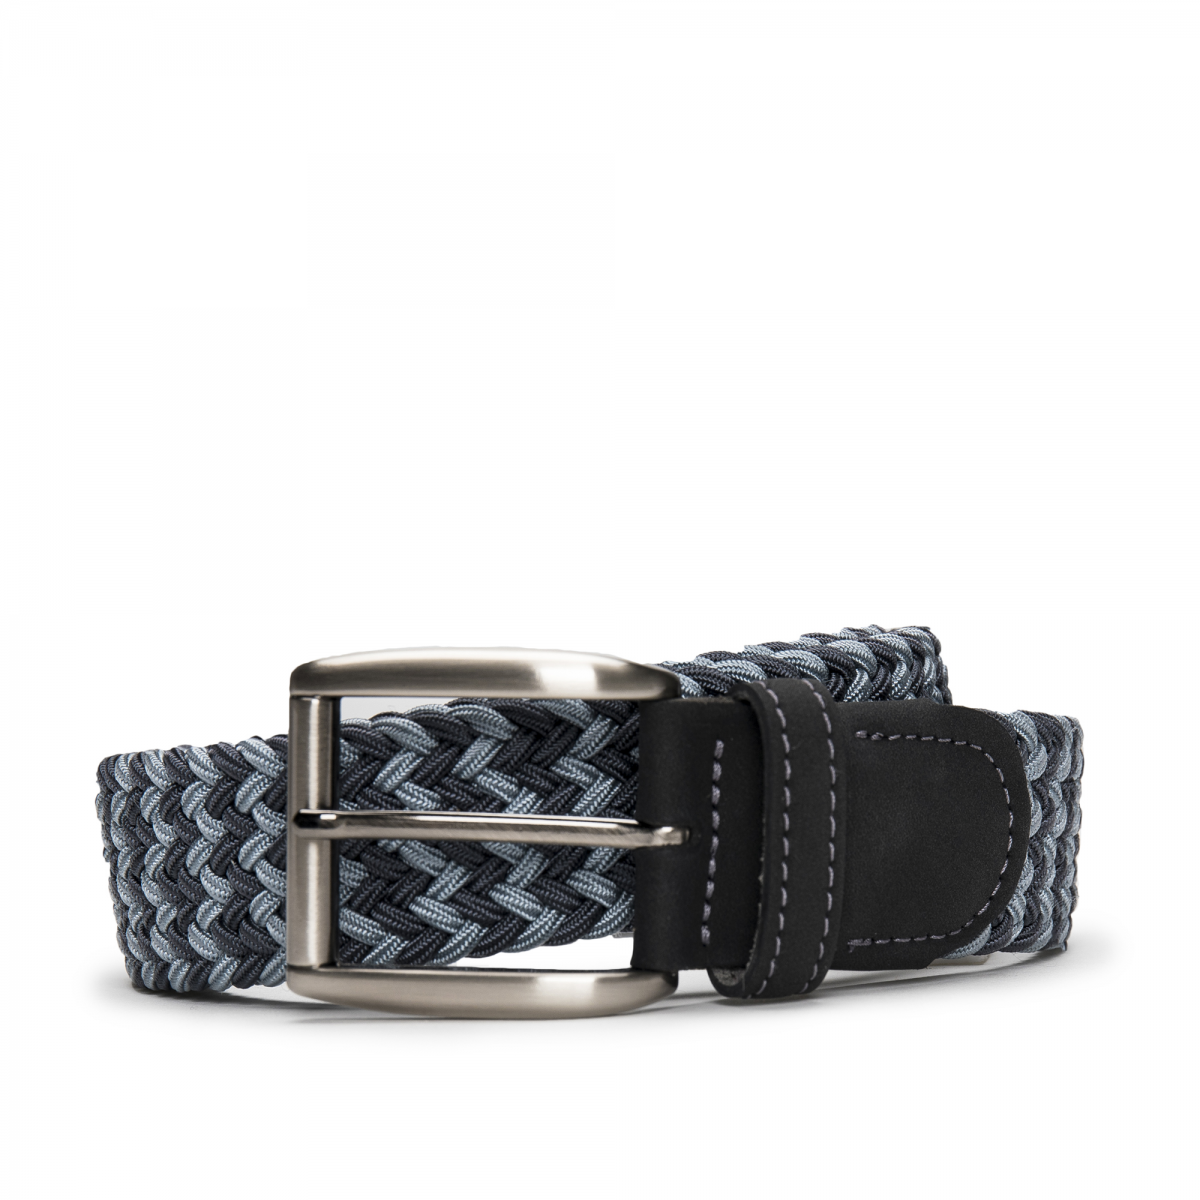 Finest leather belt-1,75'' - Belts & suspenders